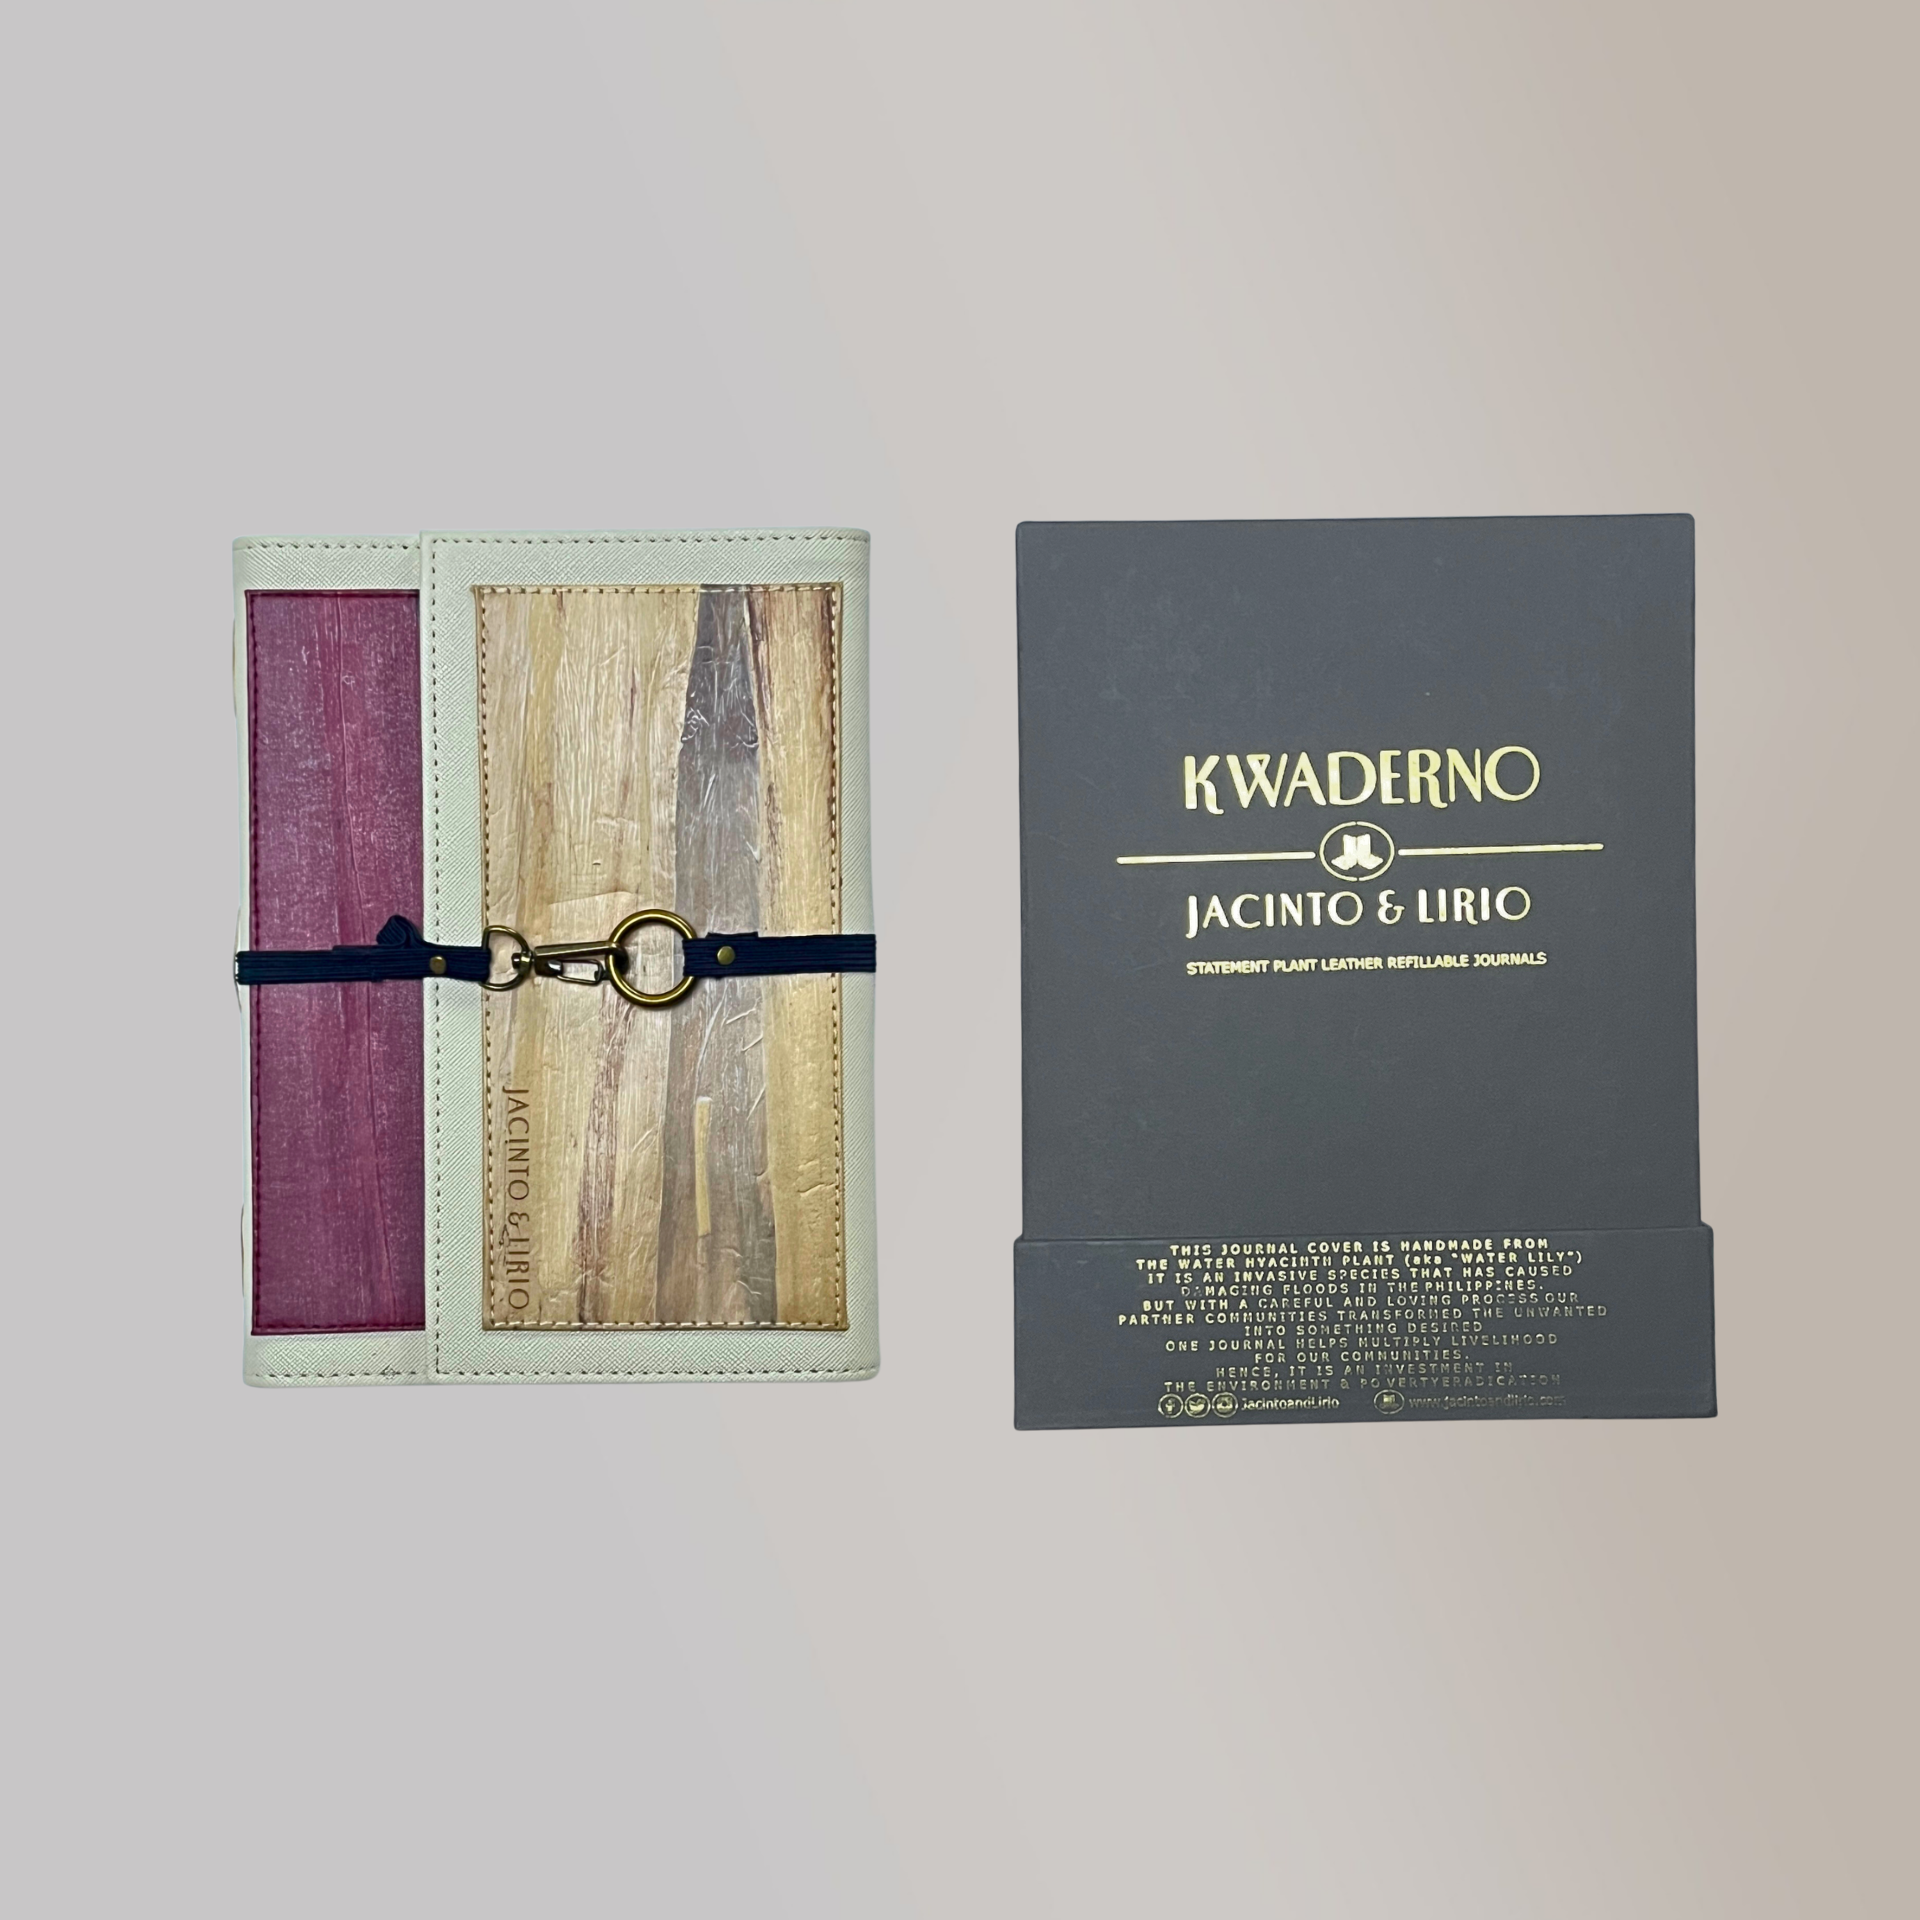 Artisan II Medium Dual Cover Refillable Vegan Leather Journal with Gift Box Packaging Bundle - Jacinto & Lirio